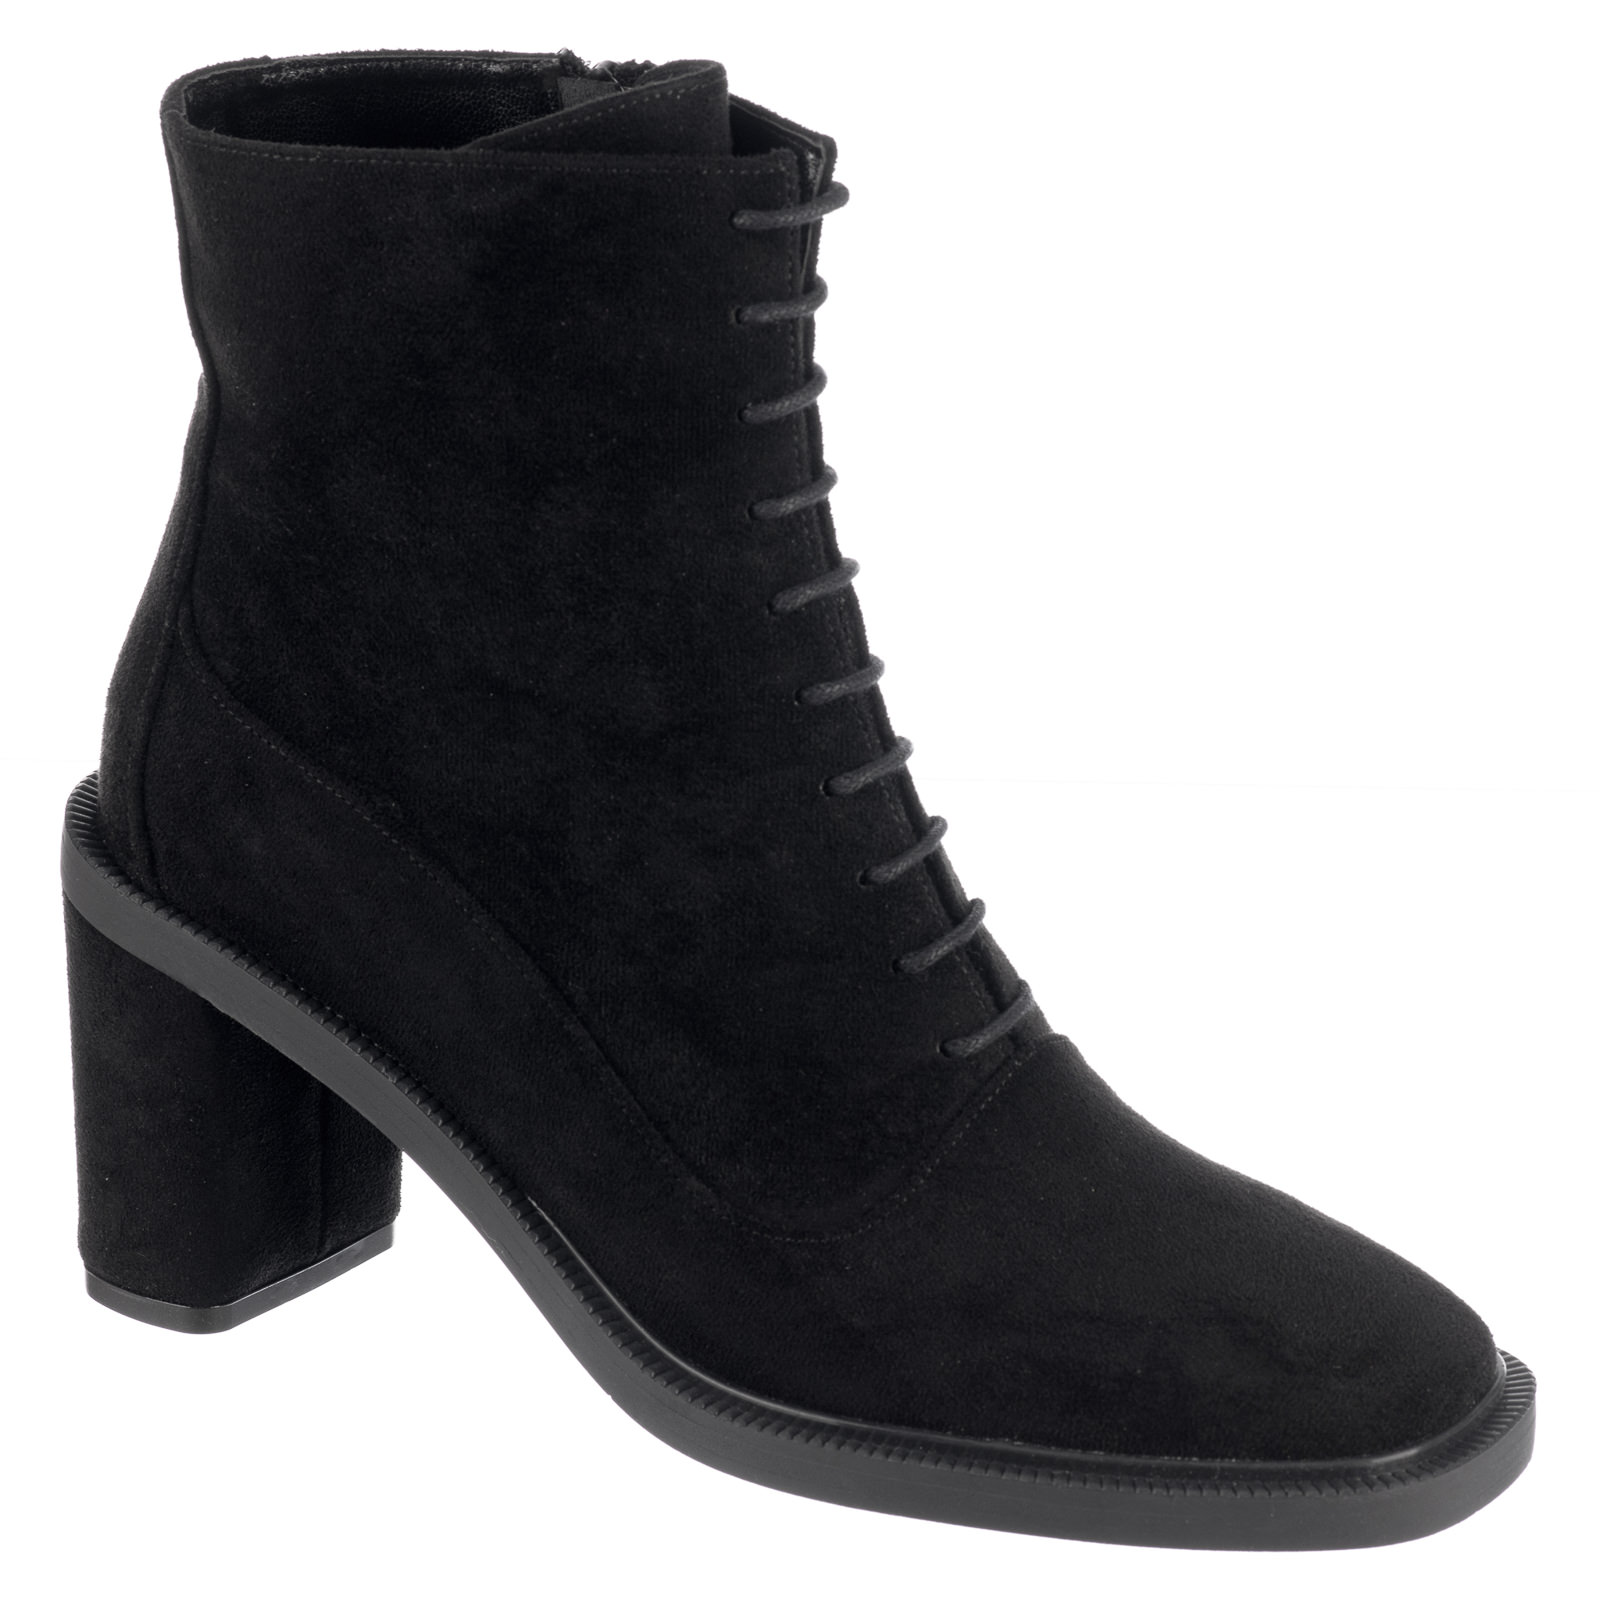 Women ankle boots B671 - BLACK